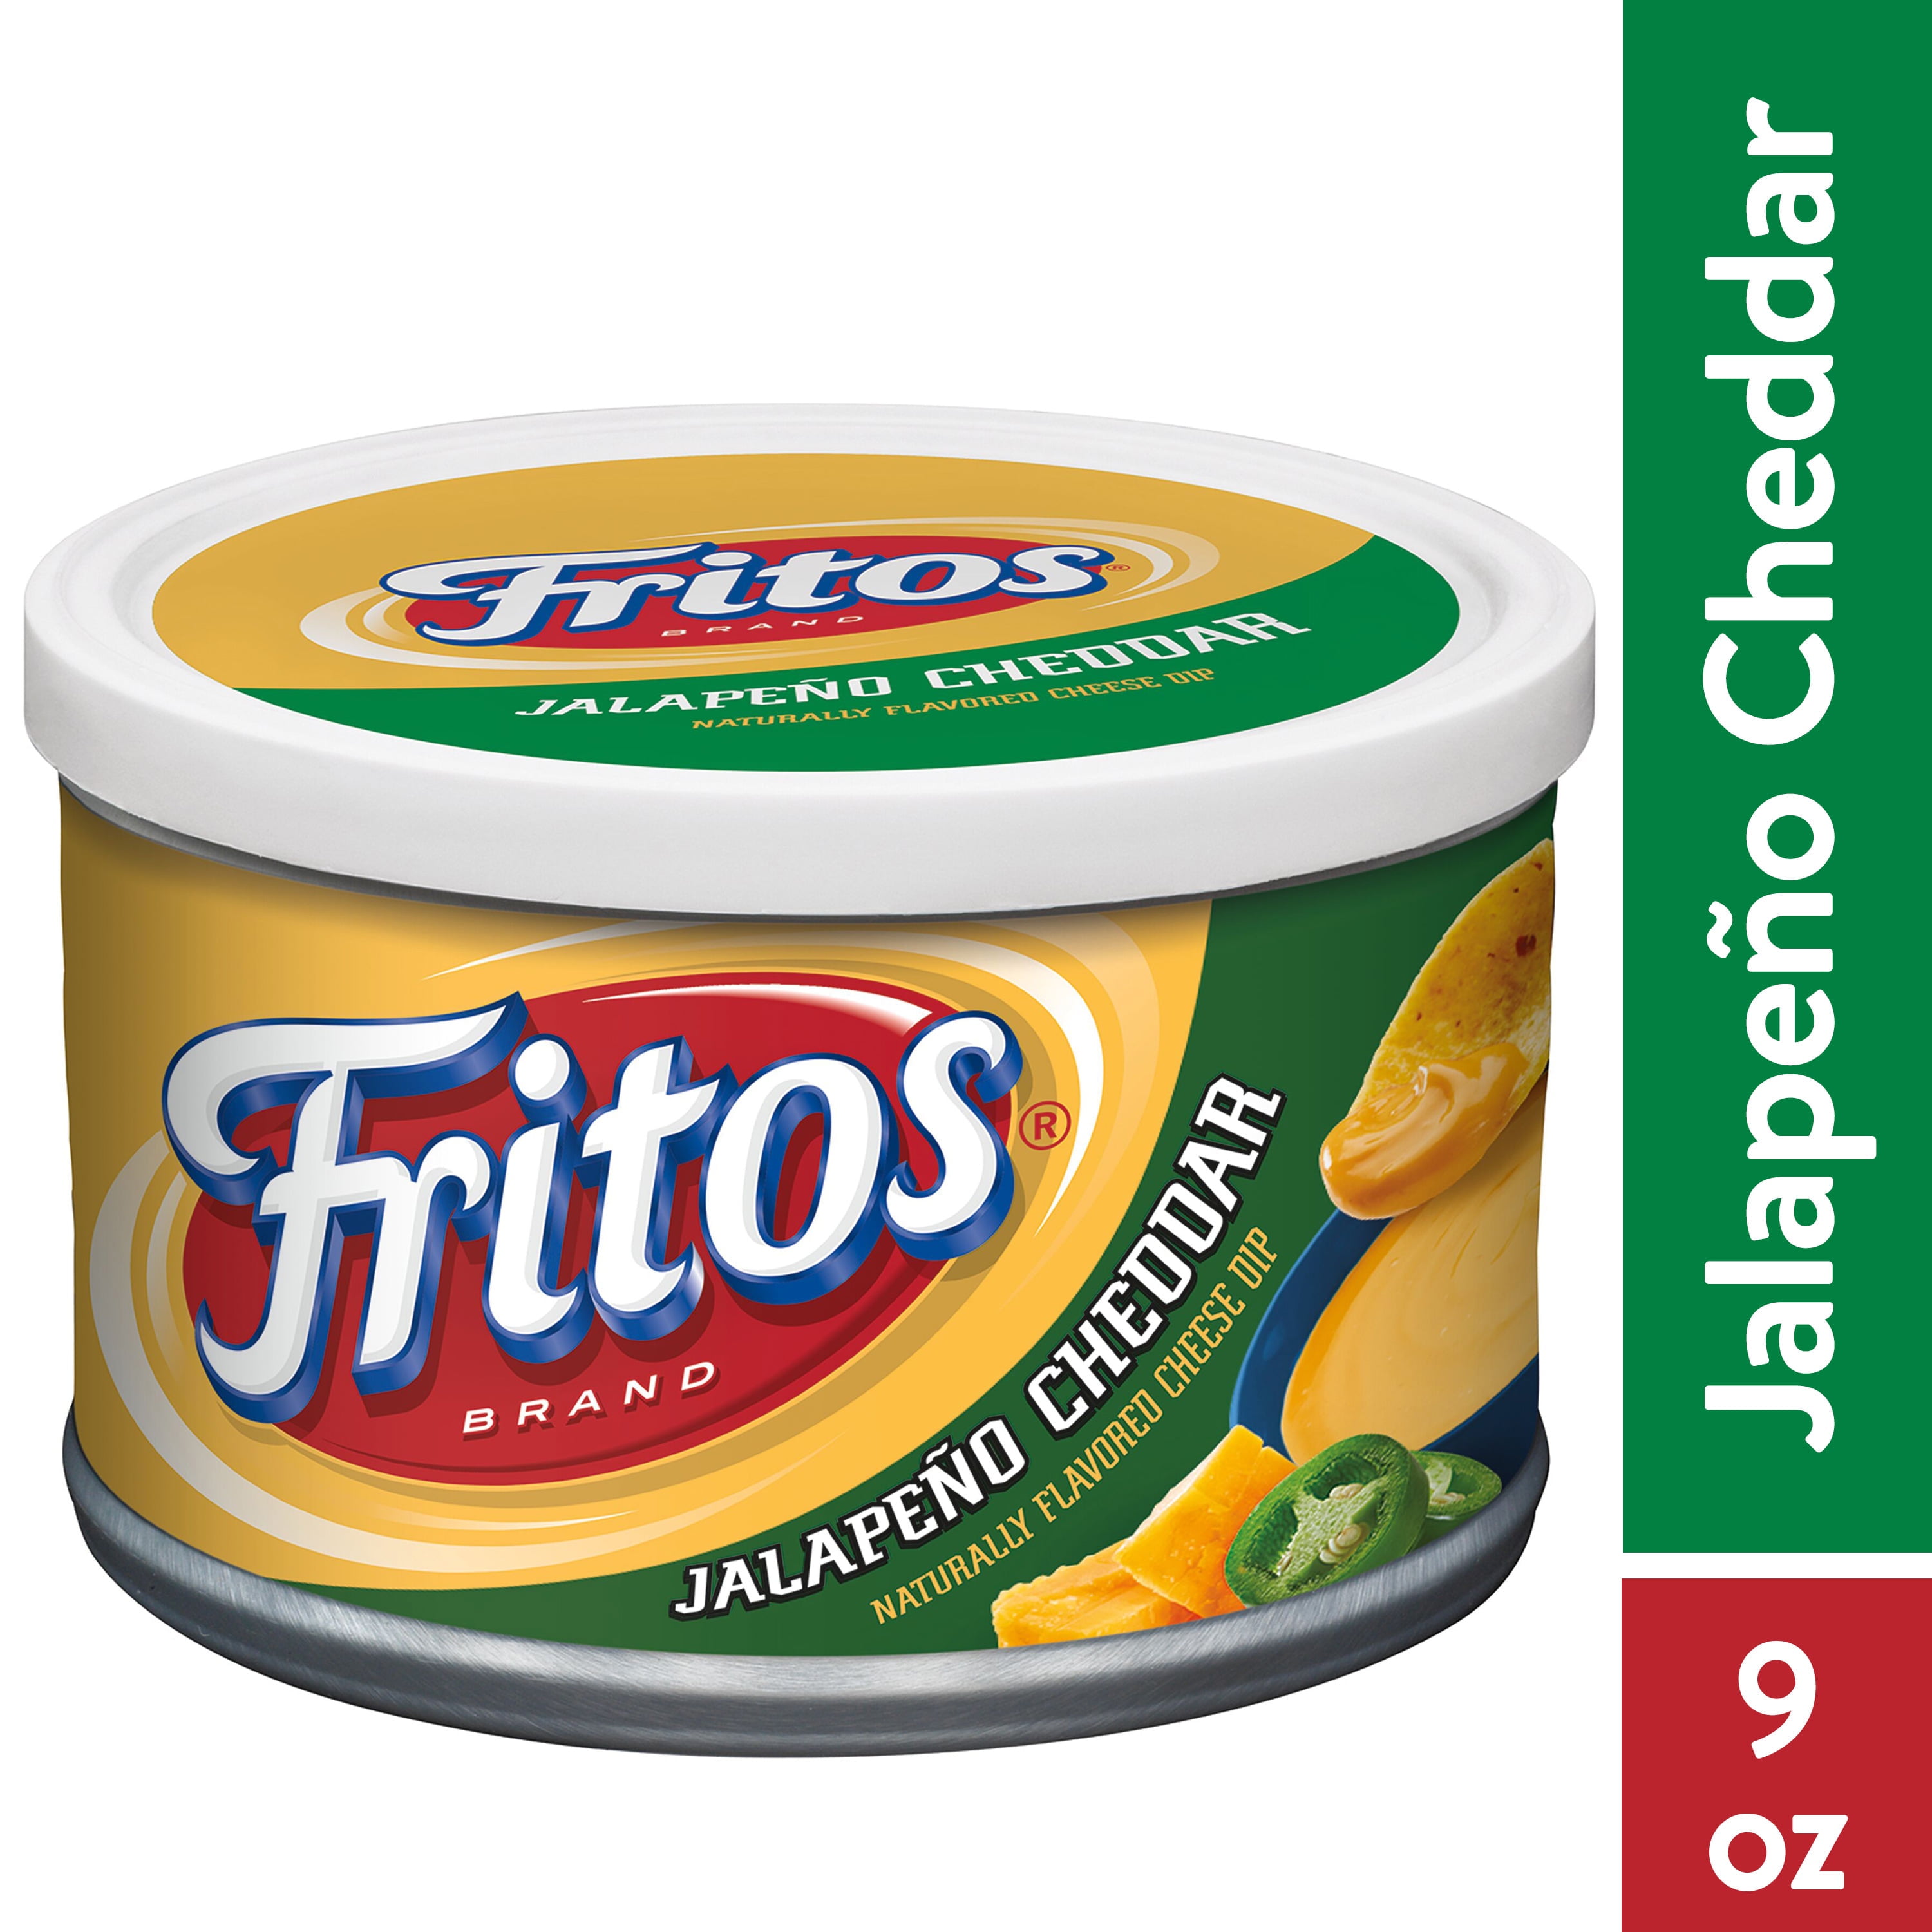 Fritos Jalapeno Cheddar Flavored Cheese Dip, Creamy, 9 oz